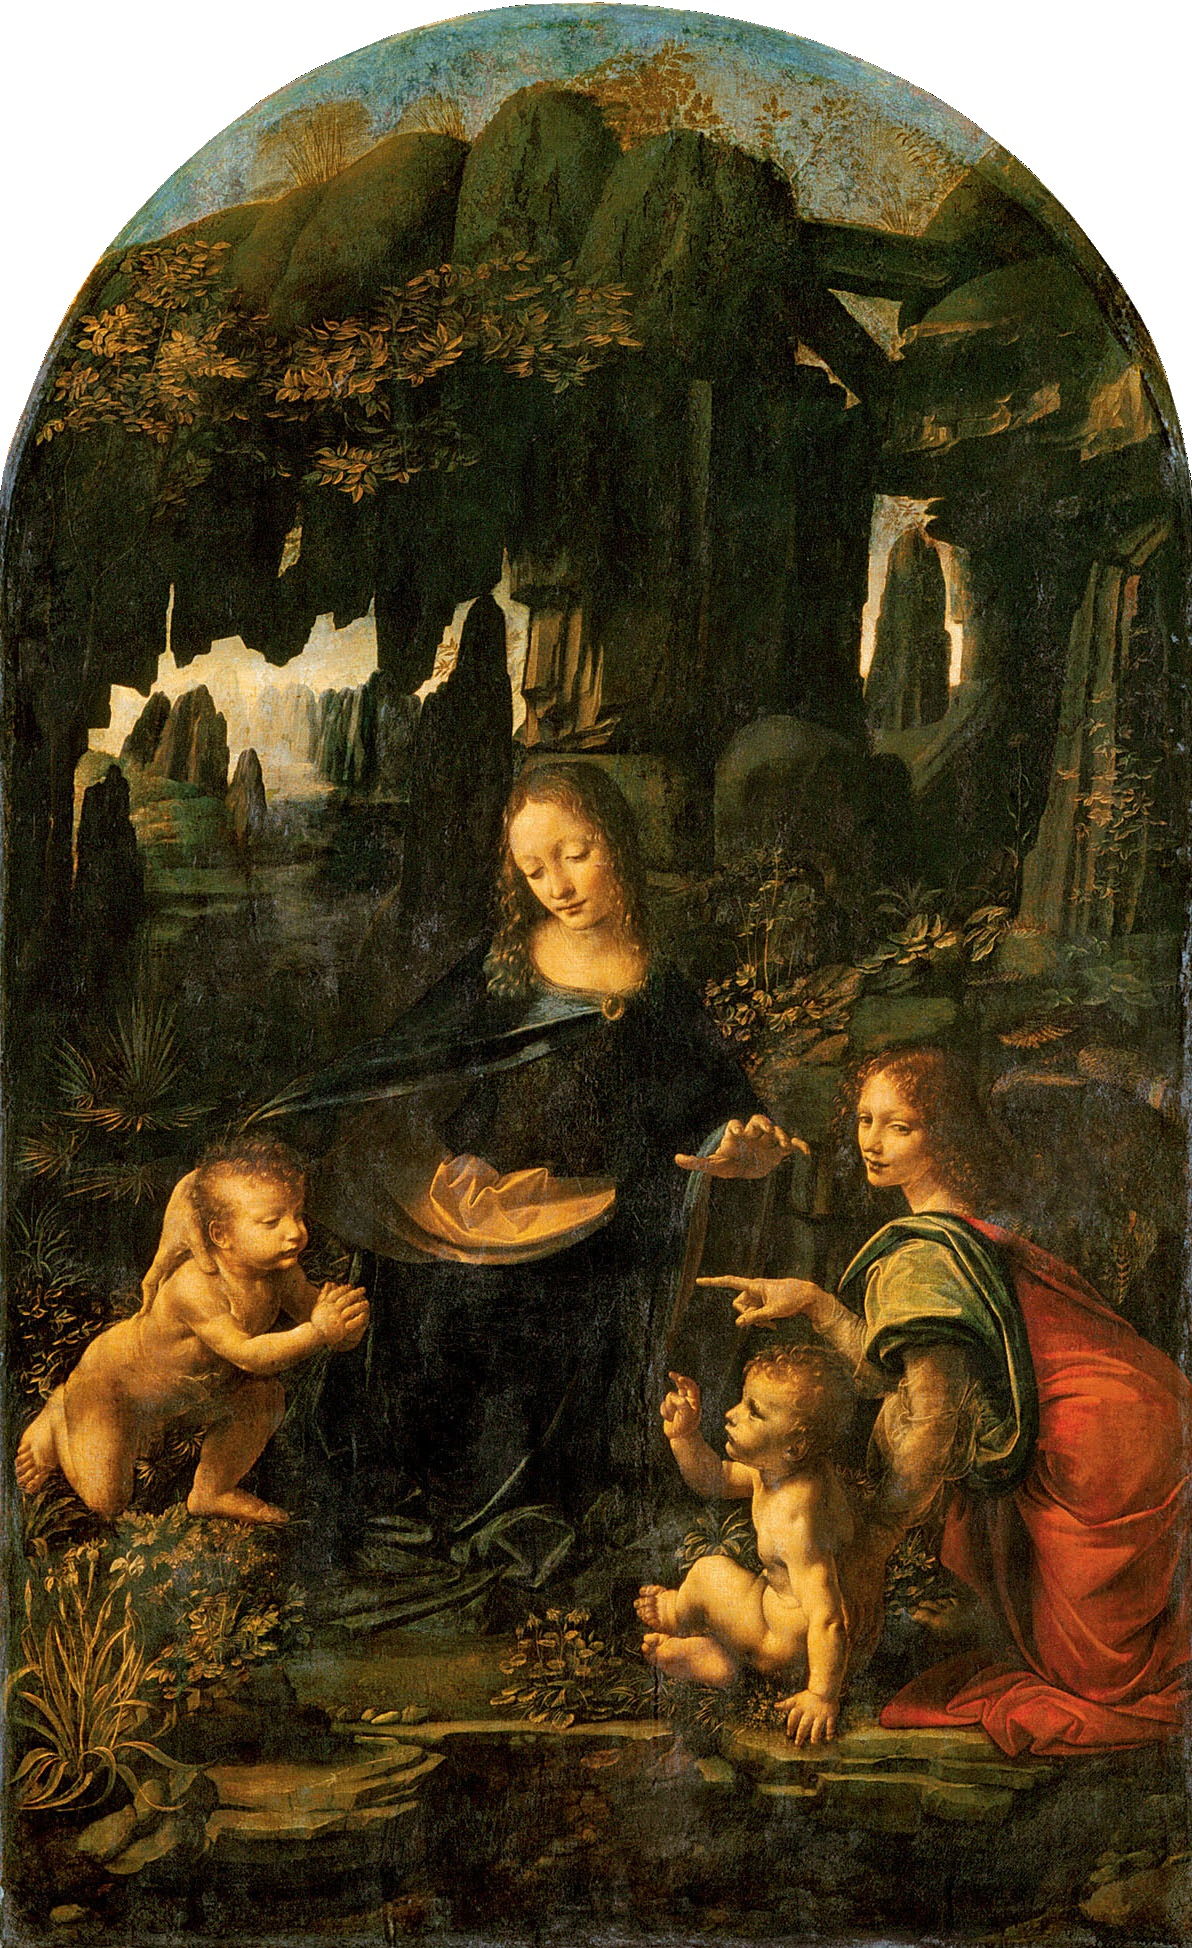 Virgin of the Rocks by Leonardo da Vinci (Louvre version)